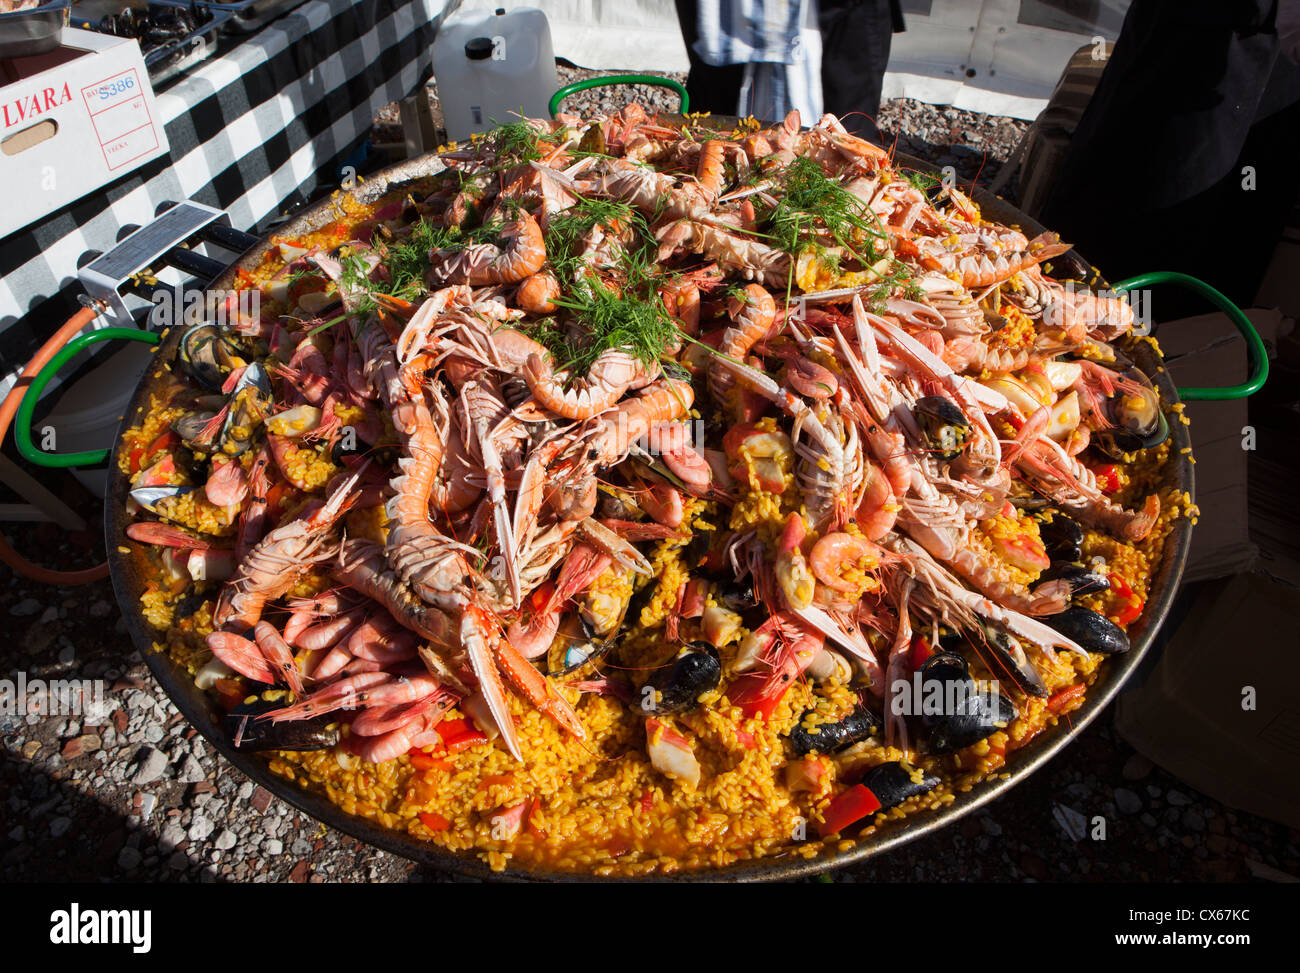 Spanish dish paella with seafood. Stock Photo